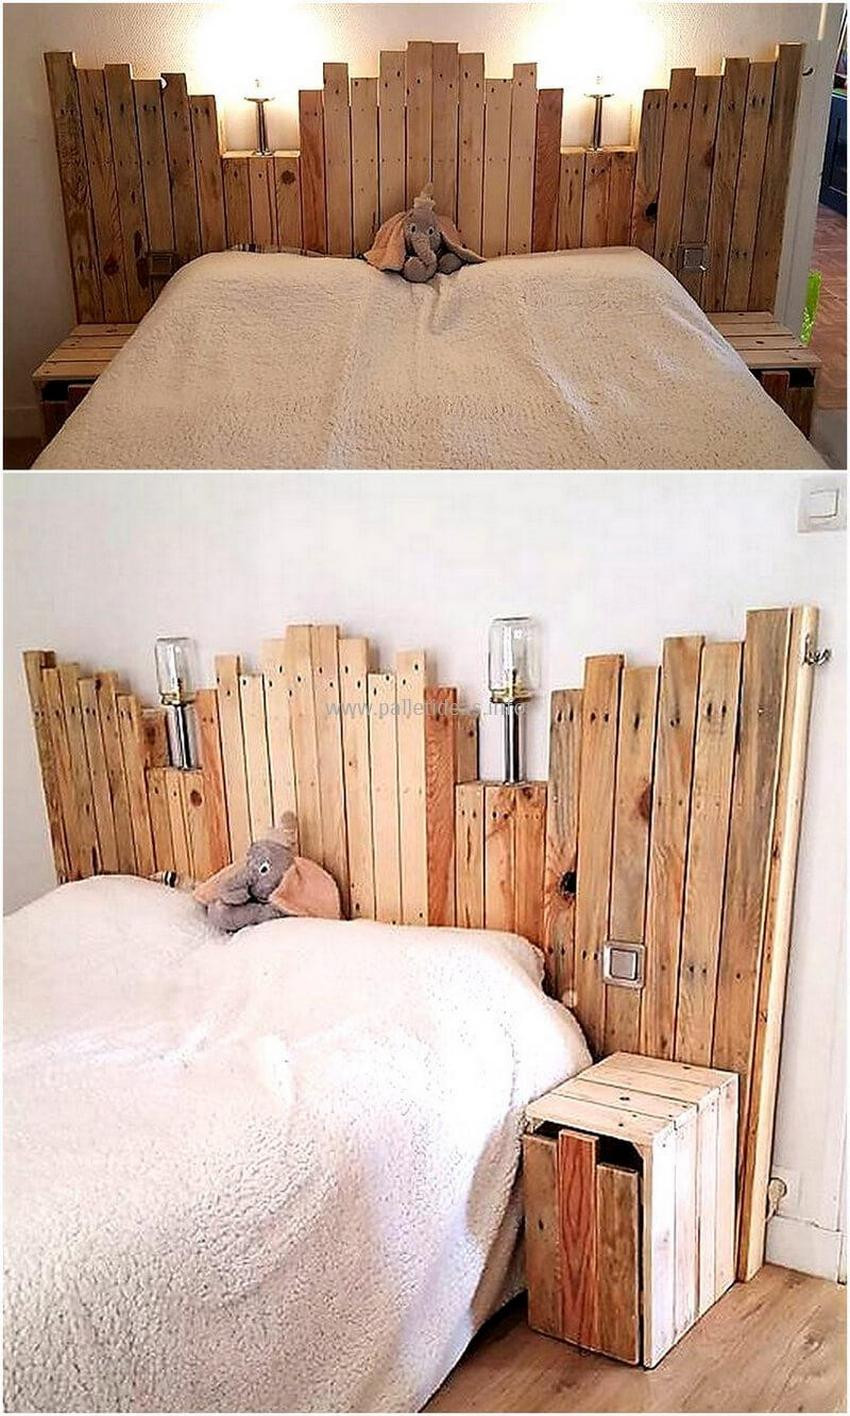 DIY Wood Pallet Headboard
 150 DIY Ideas for Wood Pallet Bed Headboards